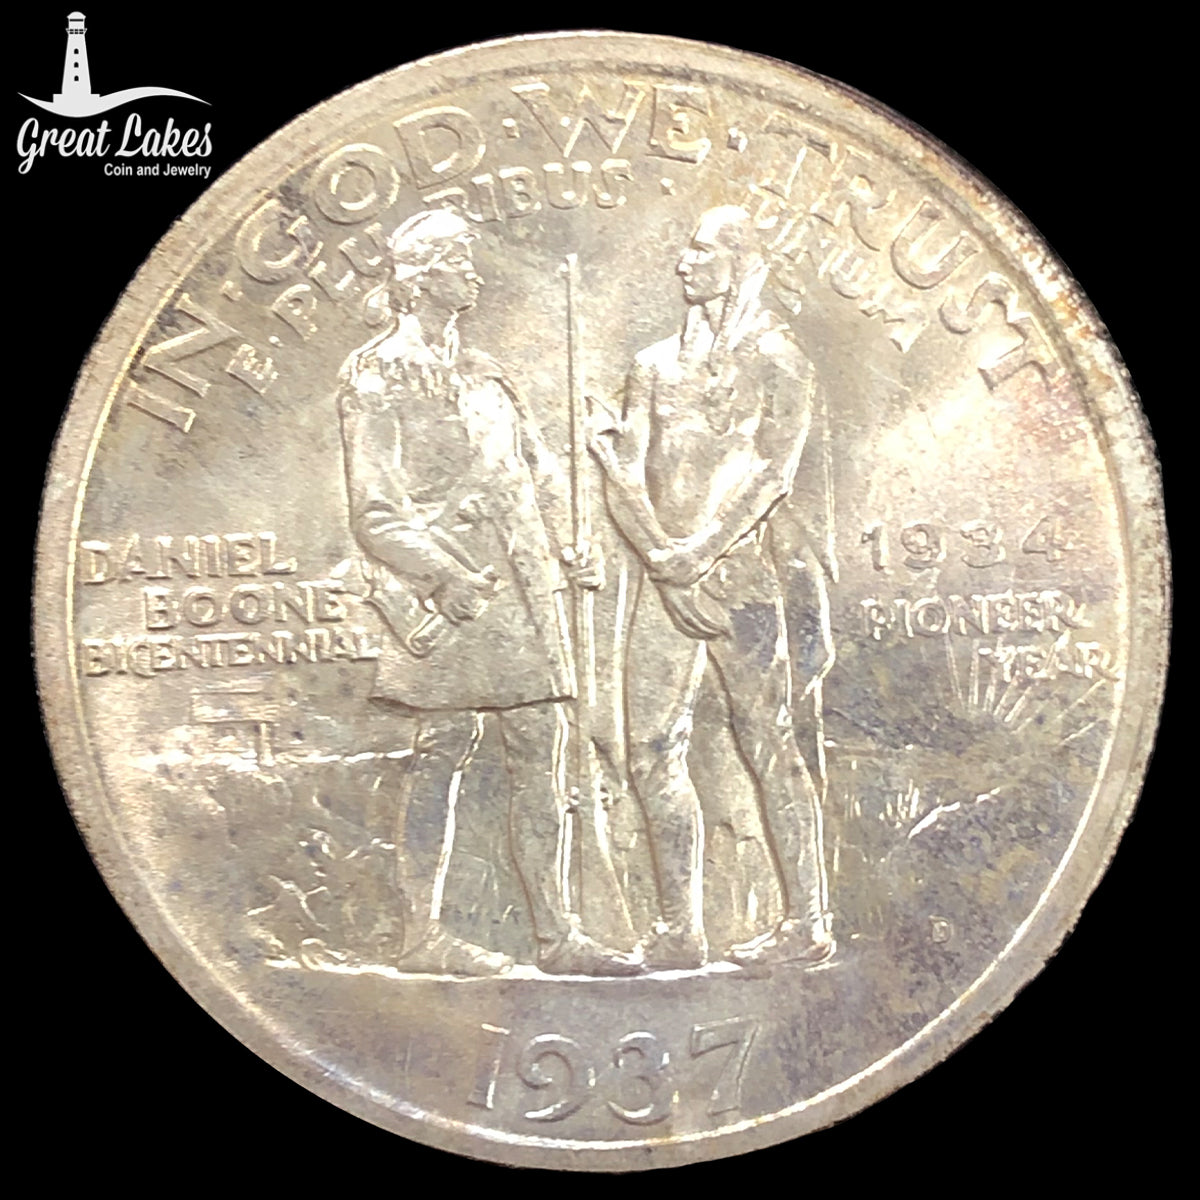 1937-D Boone Commemorative Half Dollar (BU)